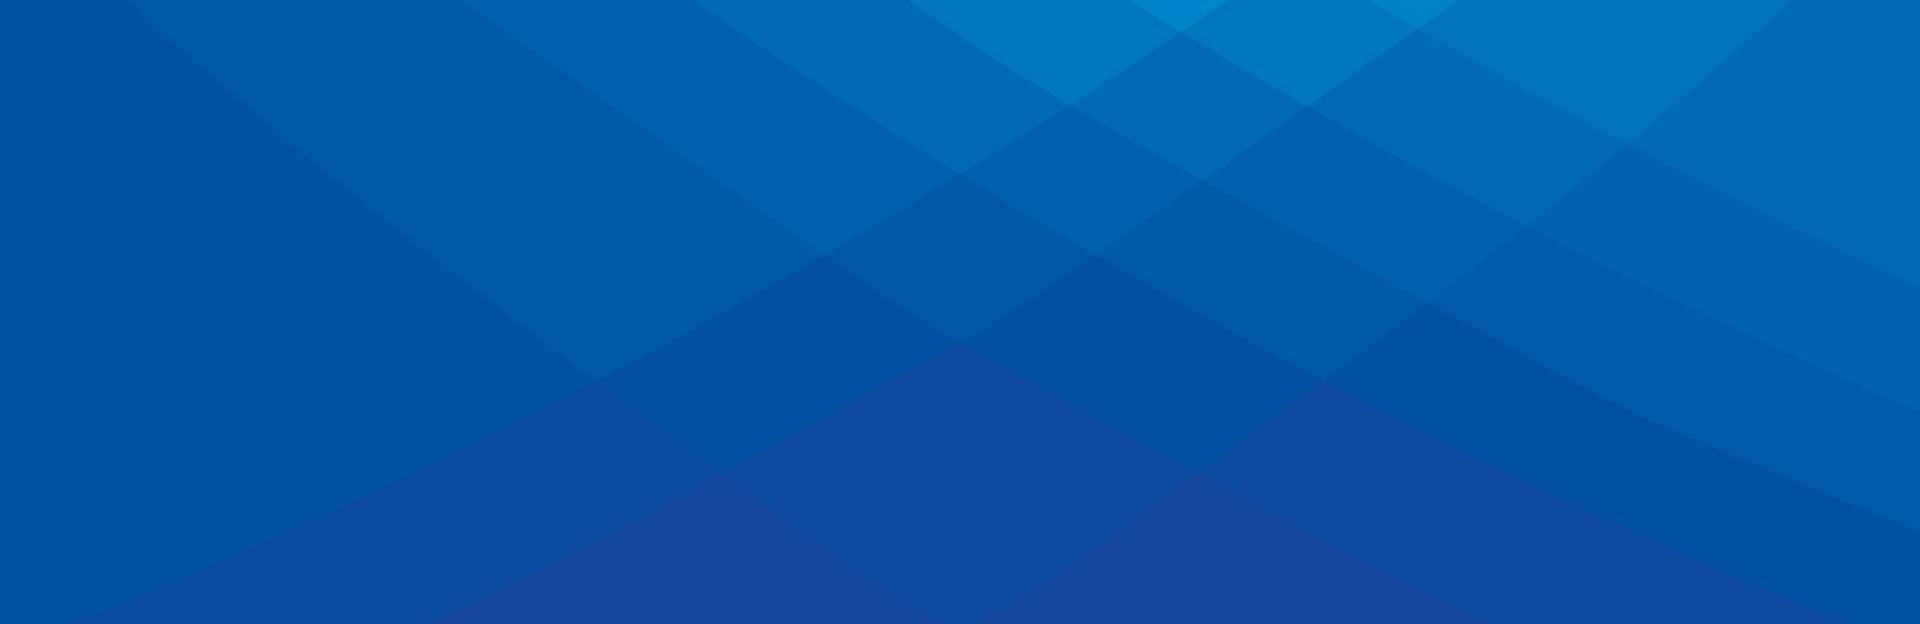 blue gradient poligonal template background. Vector illustration Business Design Template.Light blue polygonal background. Creative geometric illustration with gradient style. presentation. web banner